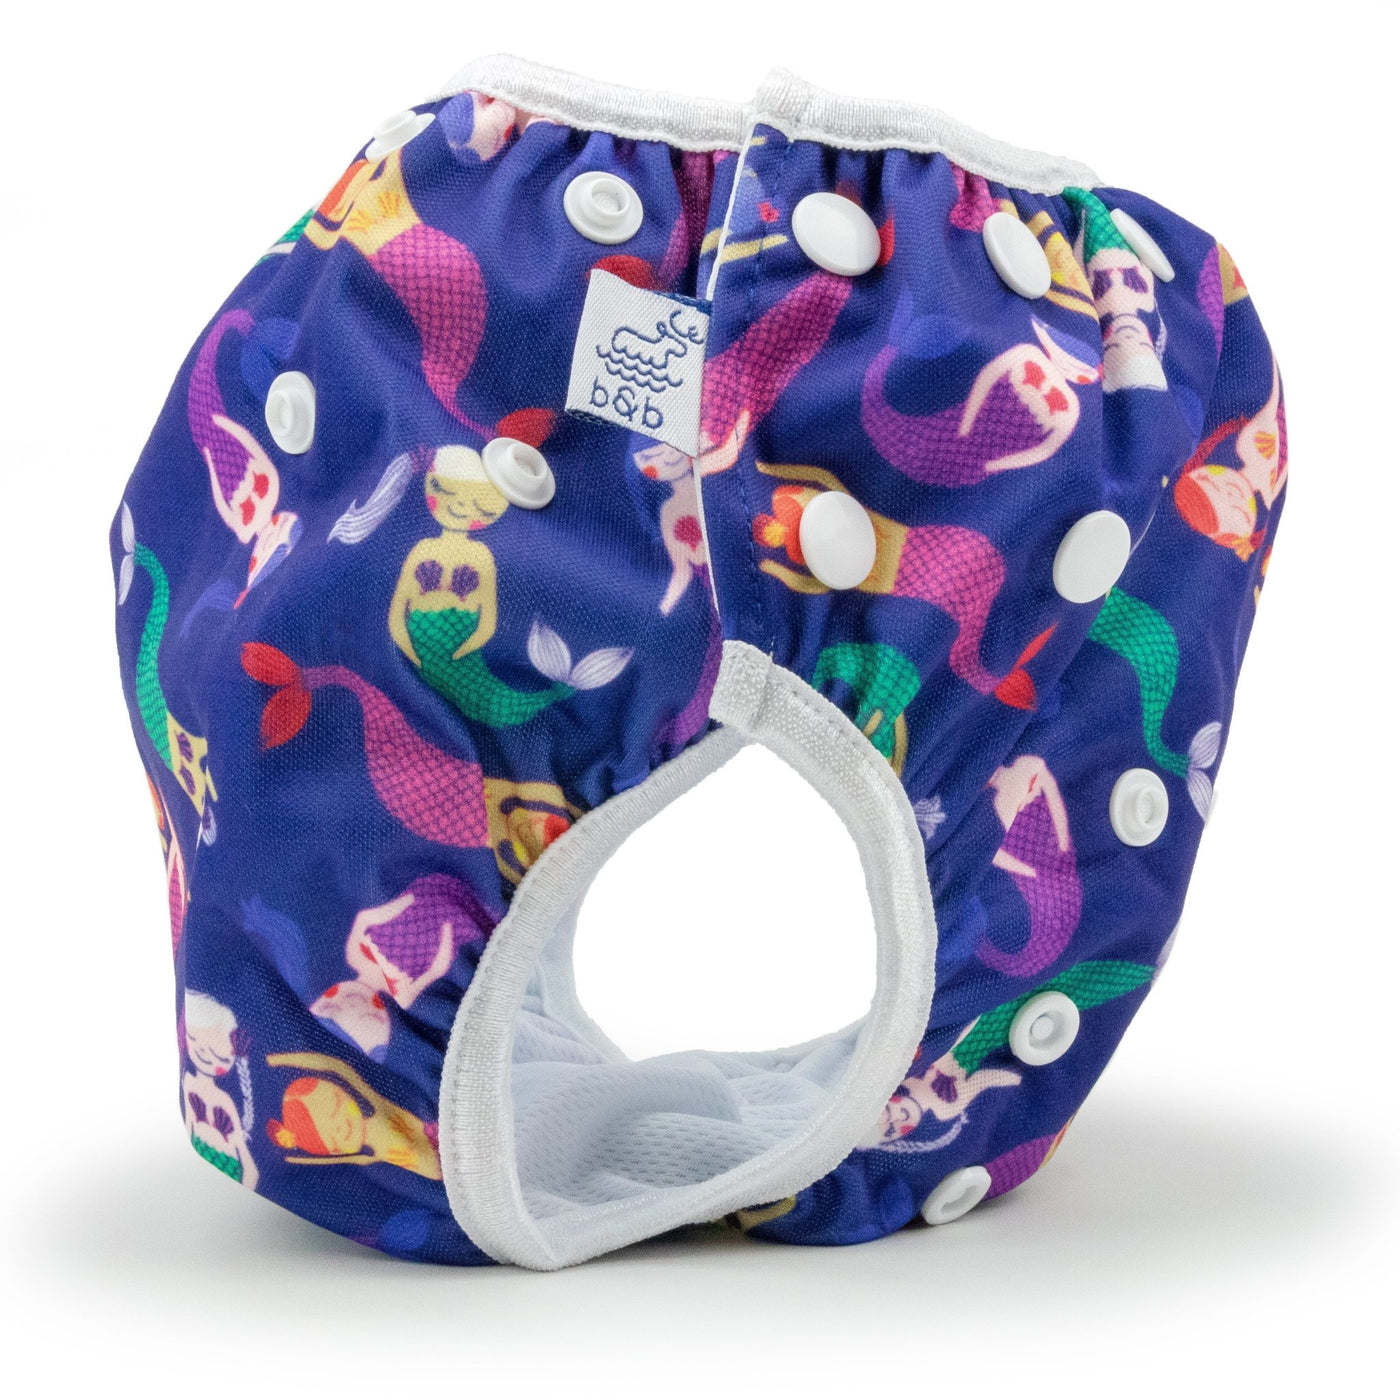 Toddler Size Mermaids Reusable Swim Diaper, Adjustable 2-5 Years Old